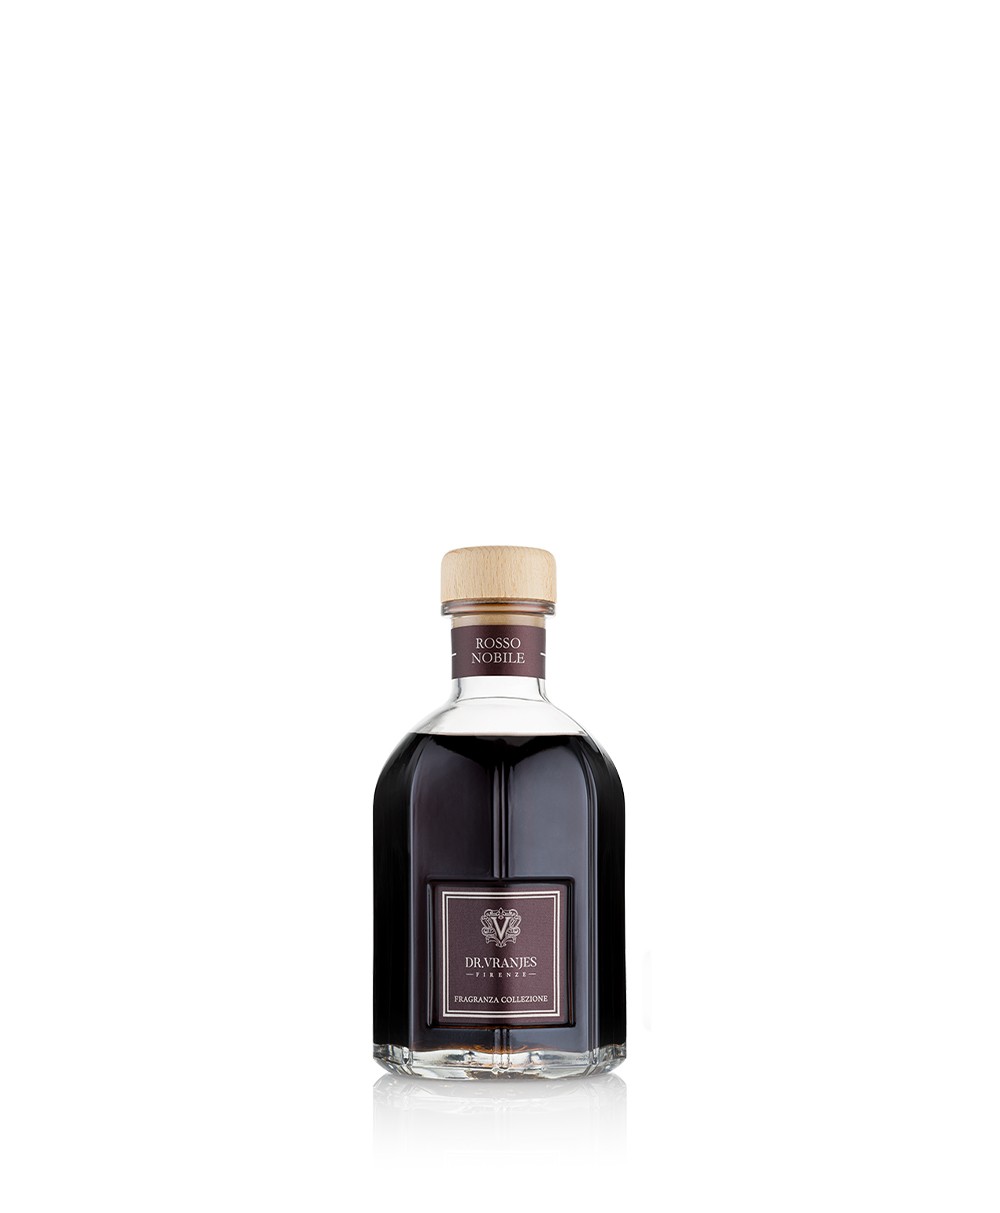 Rosso Nobile Diffuser 500ml aus der Classic Fragrance Collection von Dr. Vranjes Firenze im RAUM Conceptstore